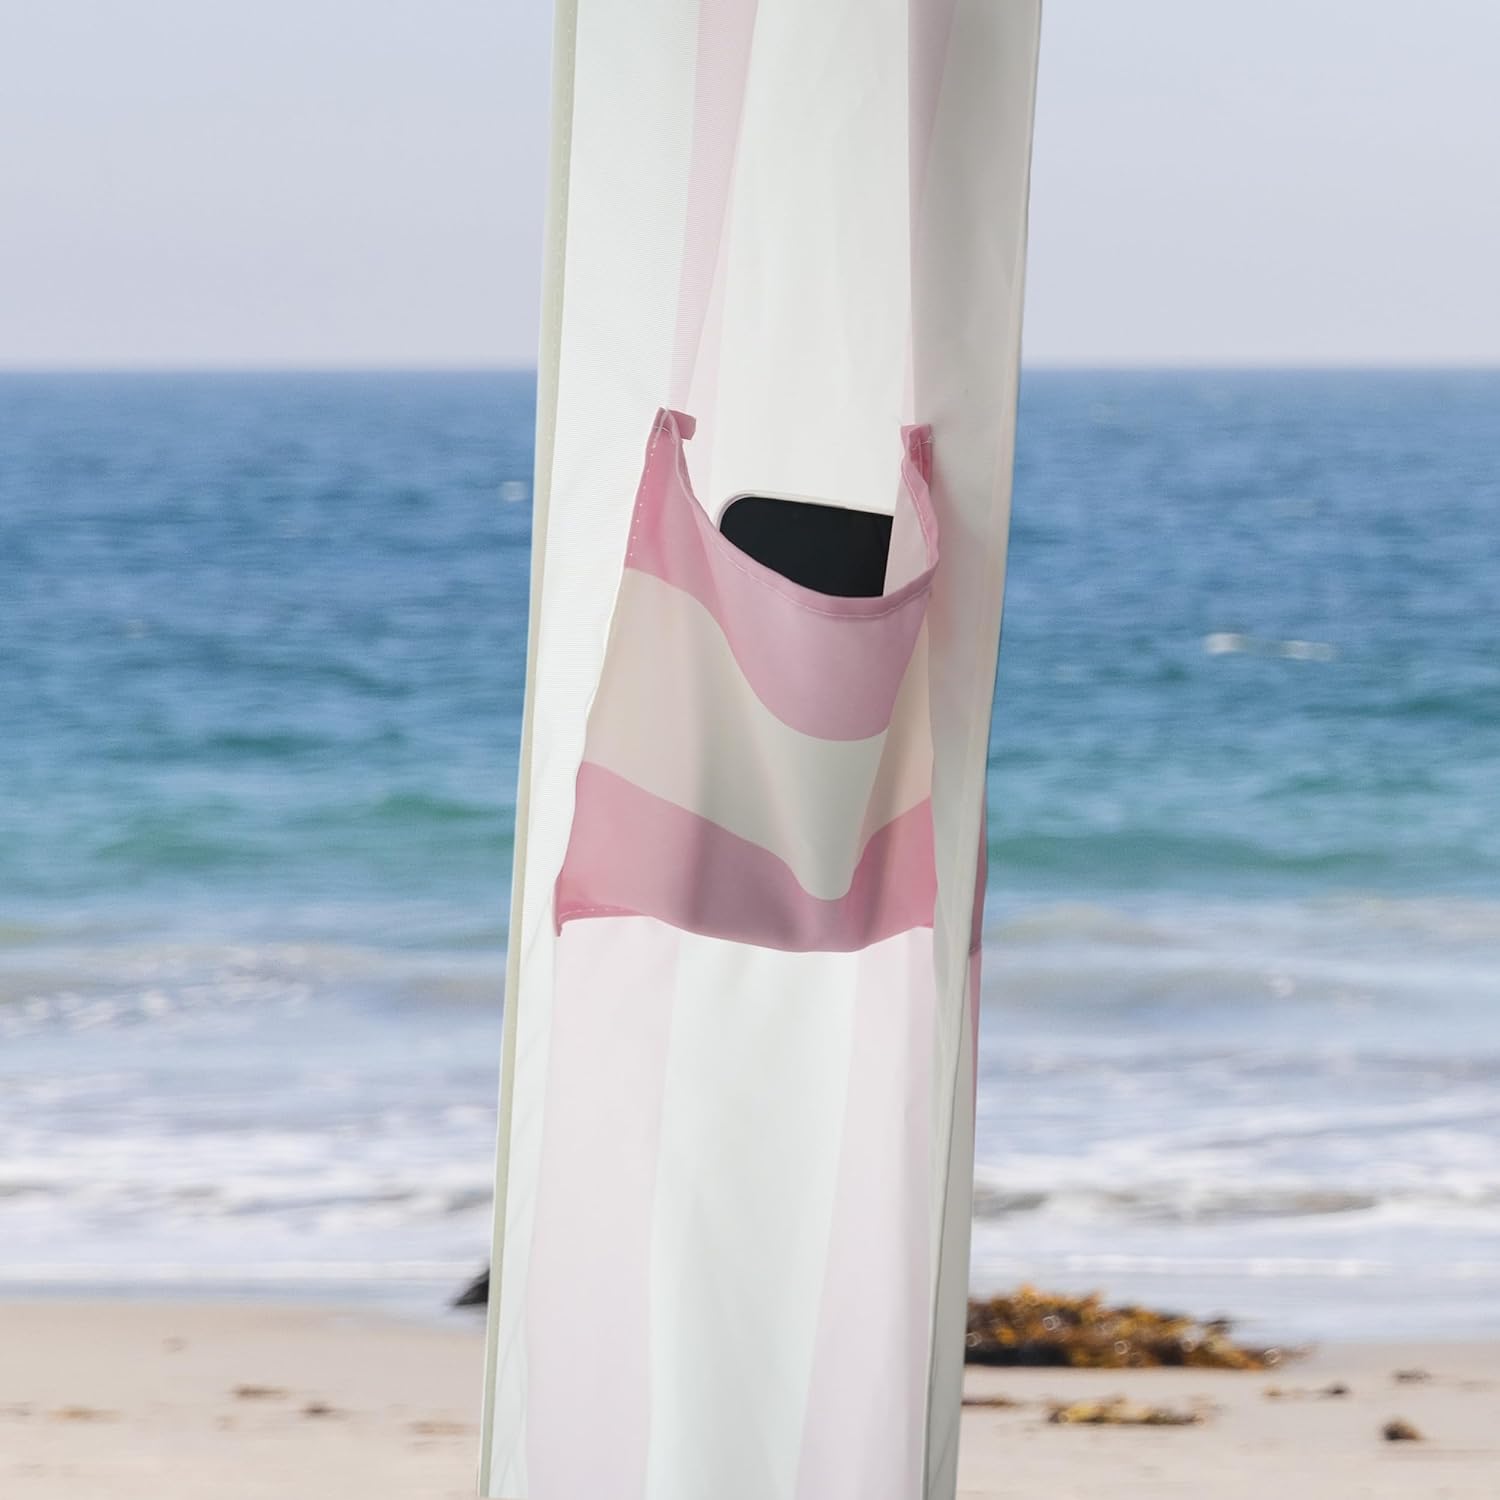 AMMSUN 6'×6' Bobo Beach Cabana with Fringe Pink Stripe